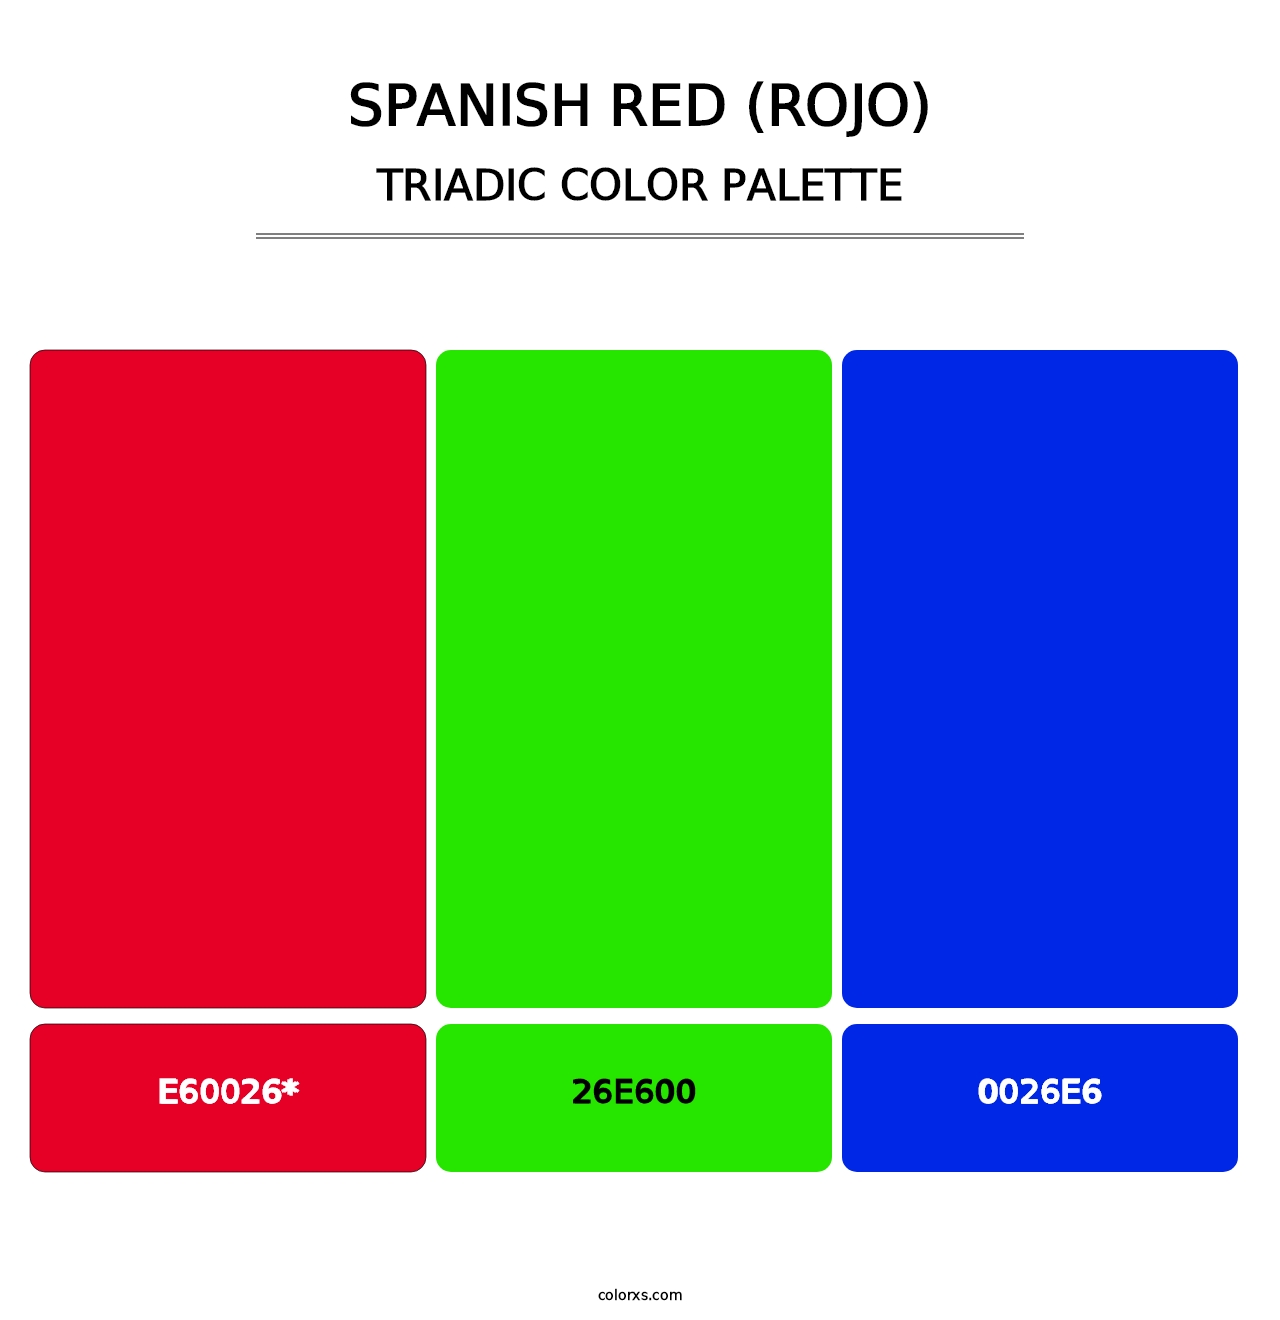 Spanish Red (Rojo) - Triadic Color Palette